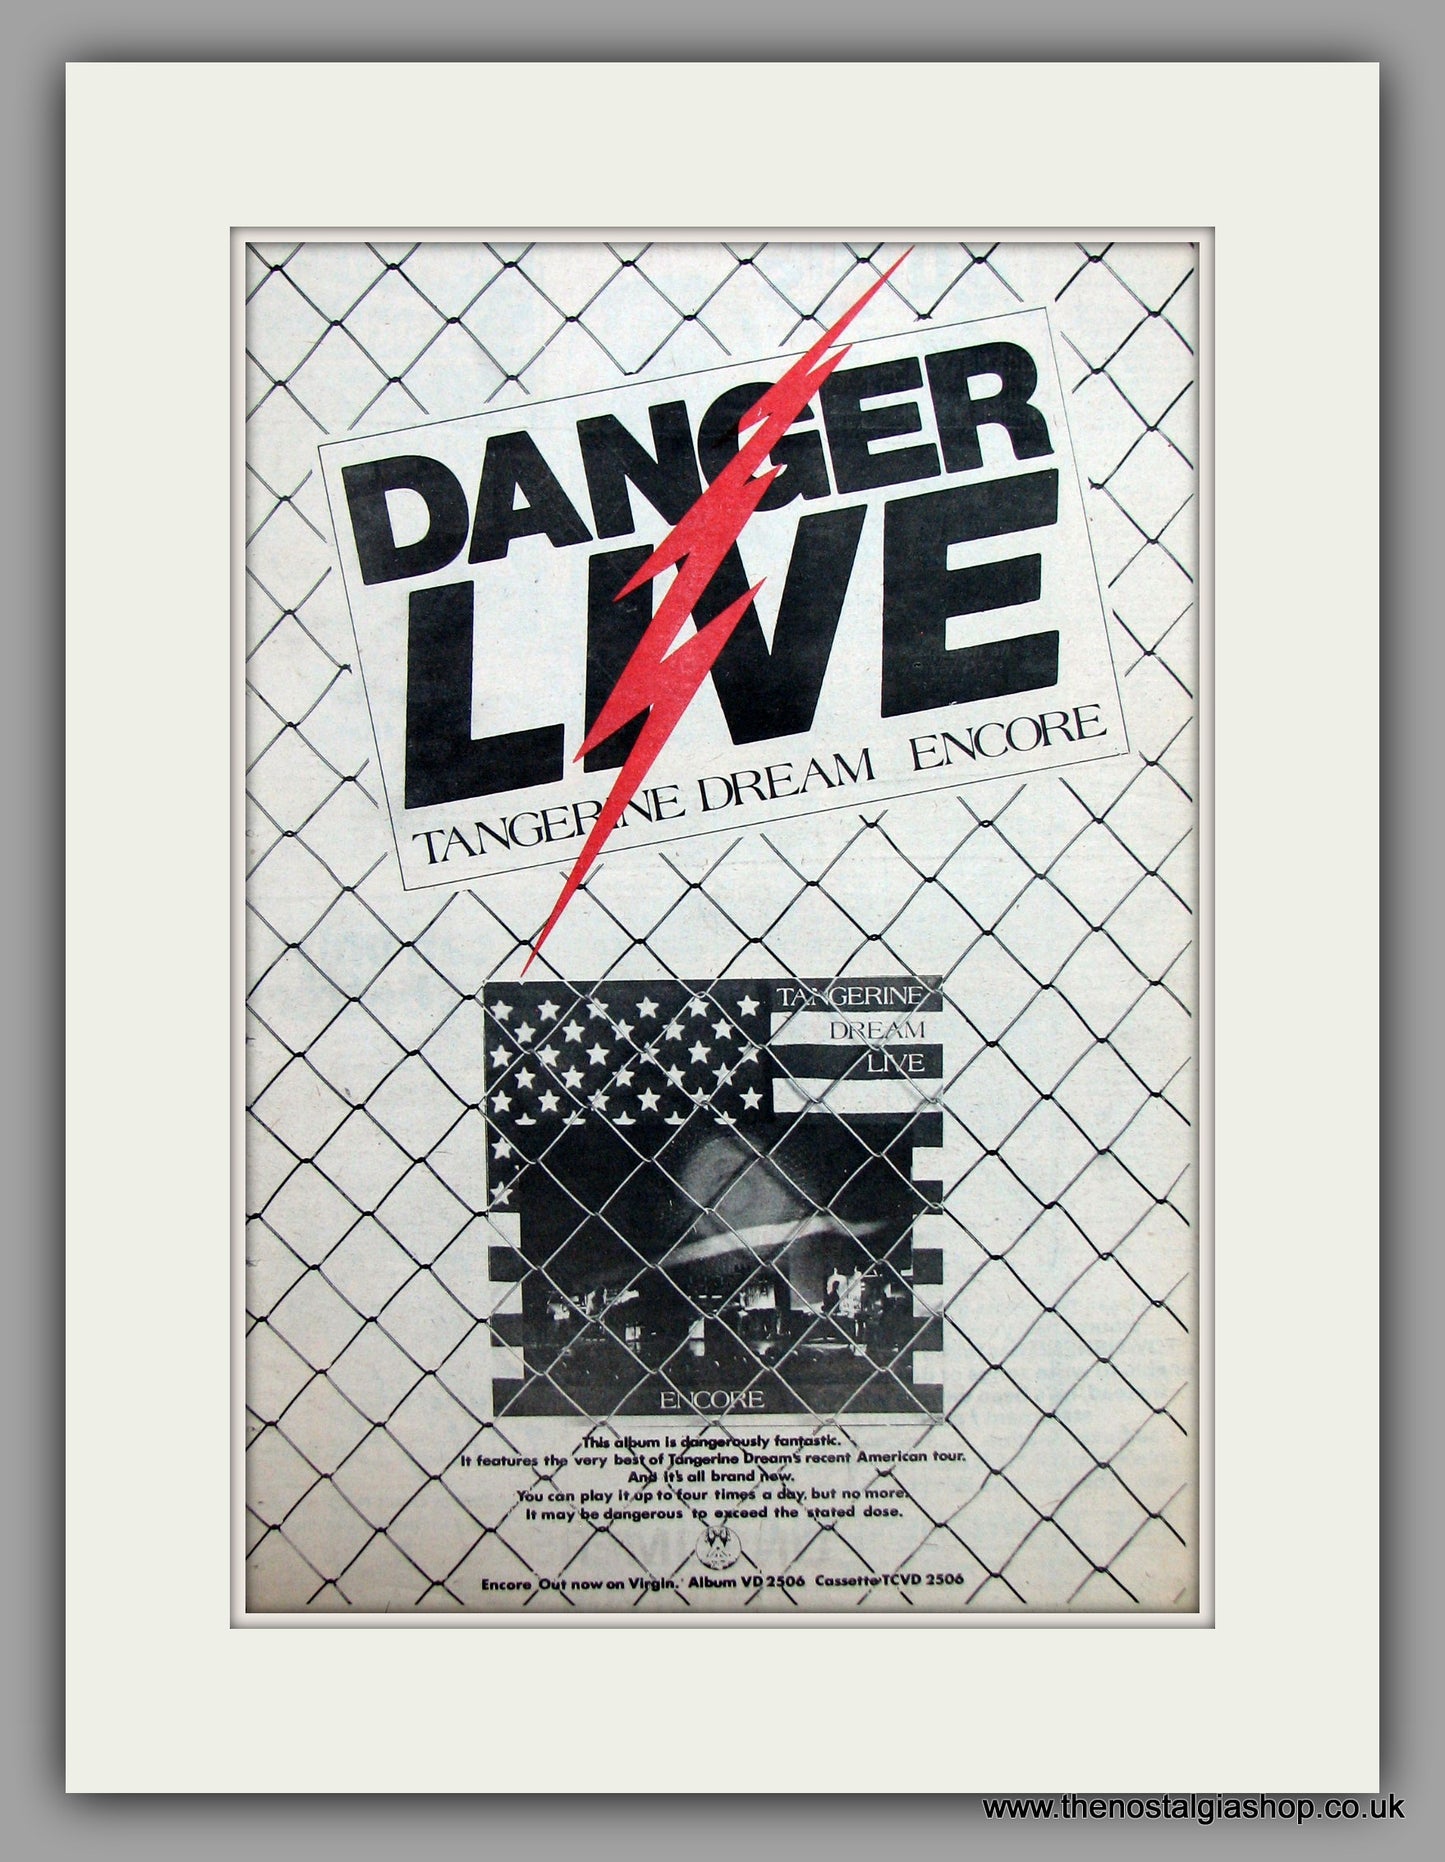 Tangerine Dream Encore-Danger Live.  Original Vintage Advert 1977 (ref AD10553)